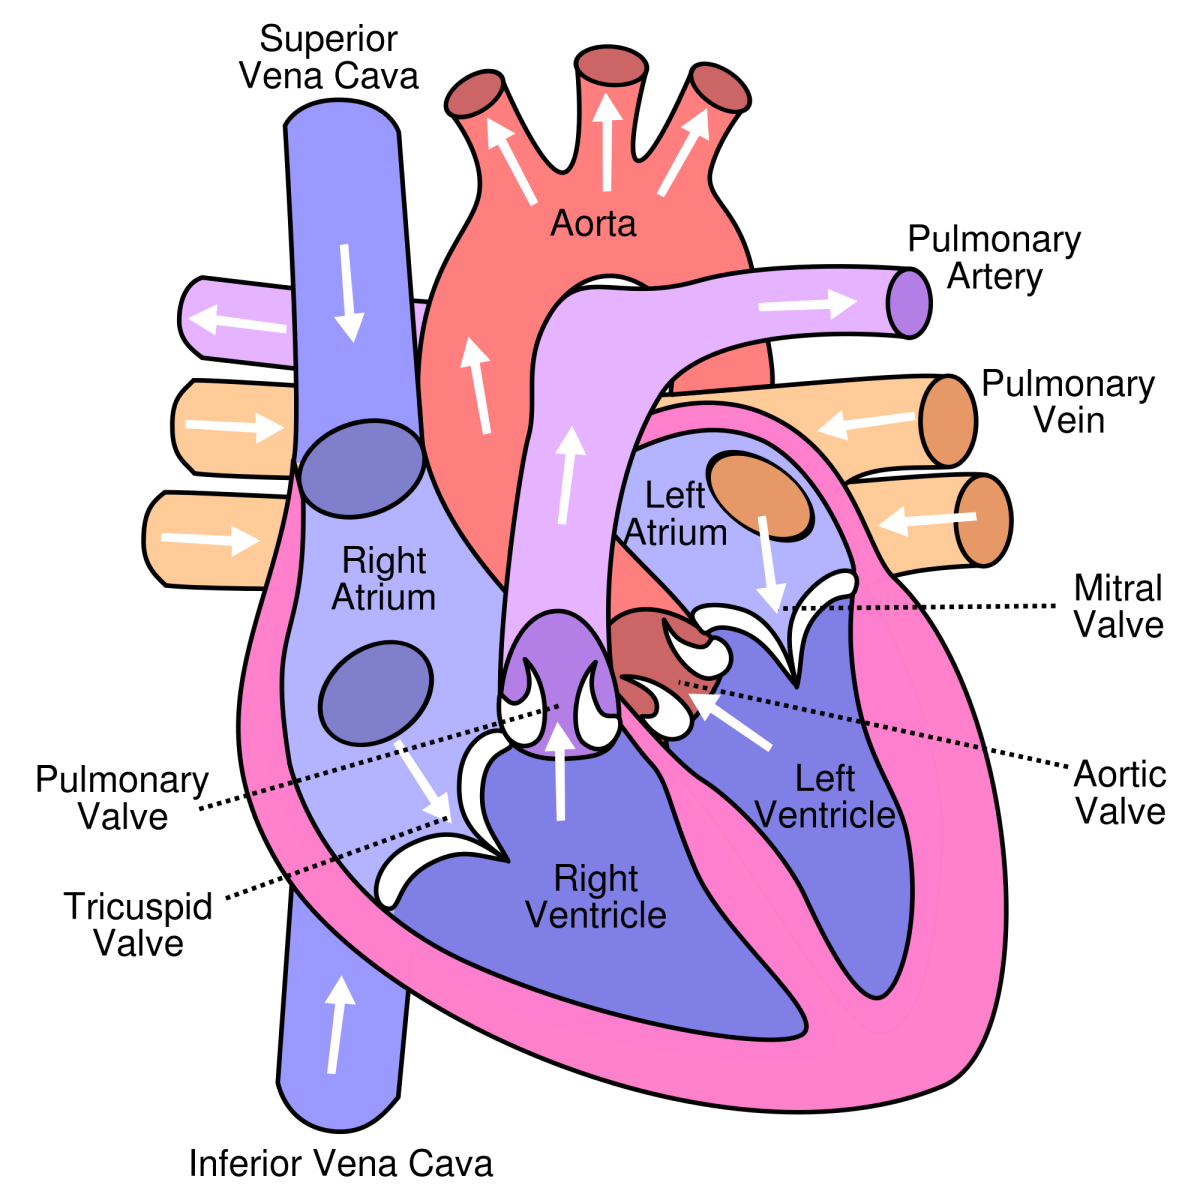 Systemic vs Pulmonary Flow, Heart Blood Flow Steps, Endocardium vs Myocardium vs Pericardium, and Systole vs Diastole [MCAT, USMLE, Biology, Medicine]